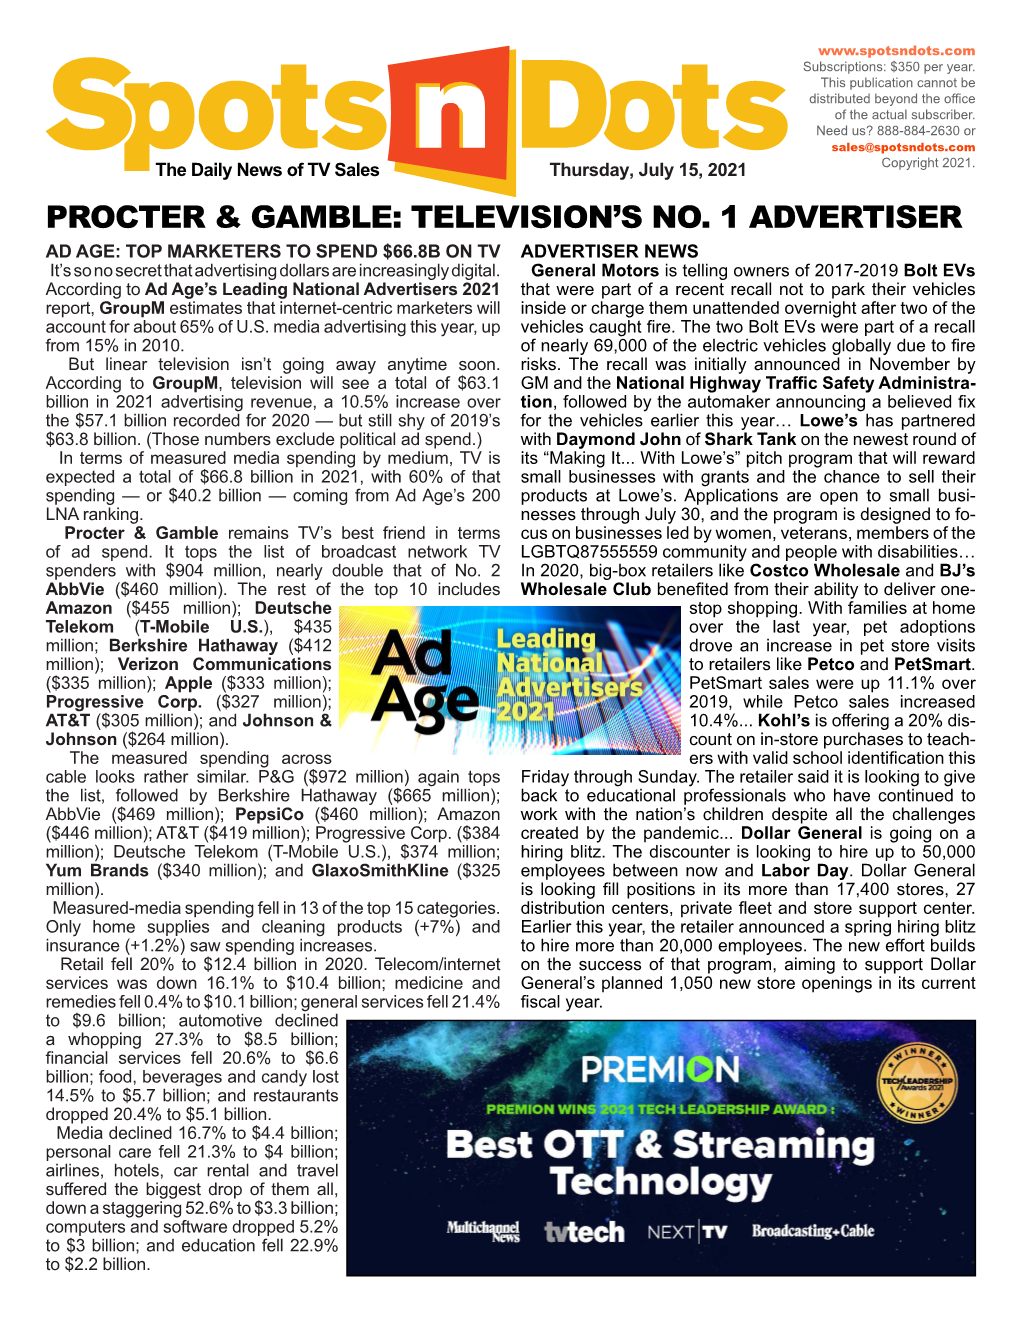 Procter & Gamble: Television's No. 1